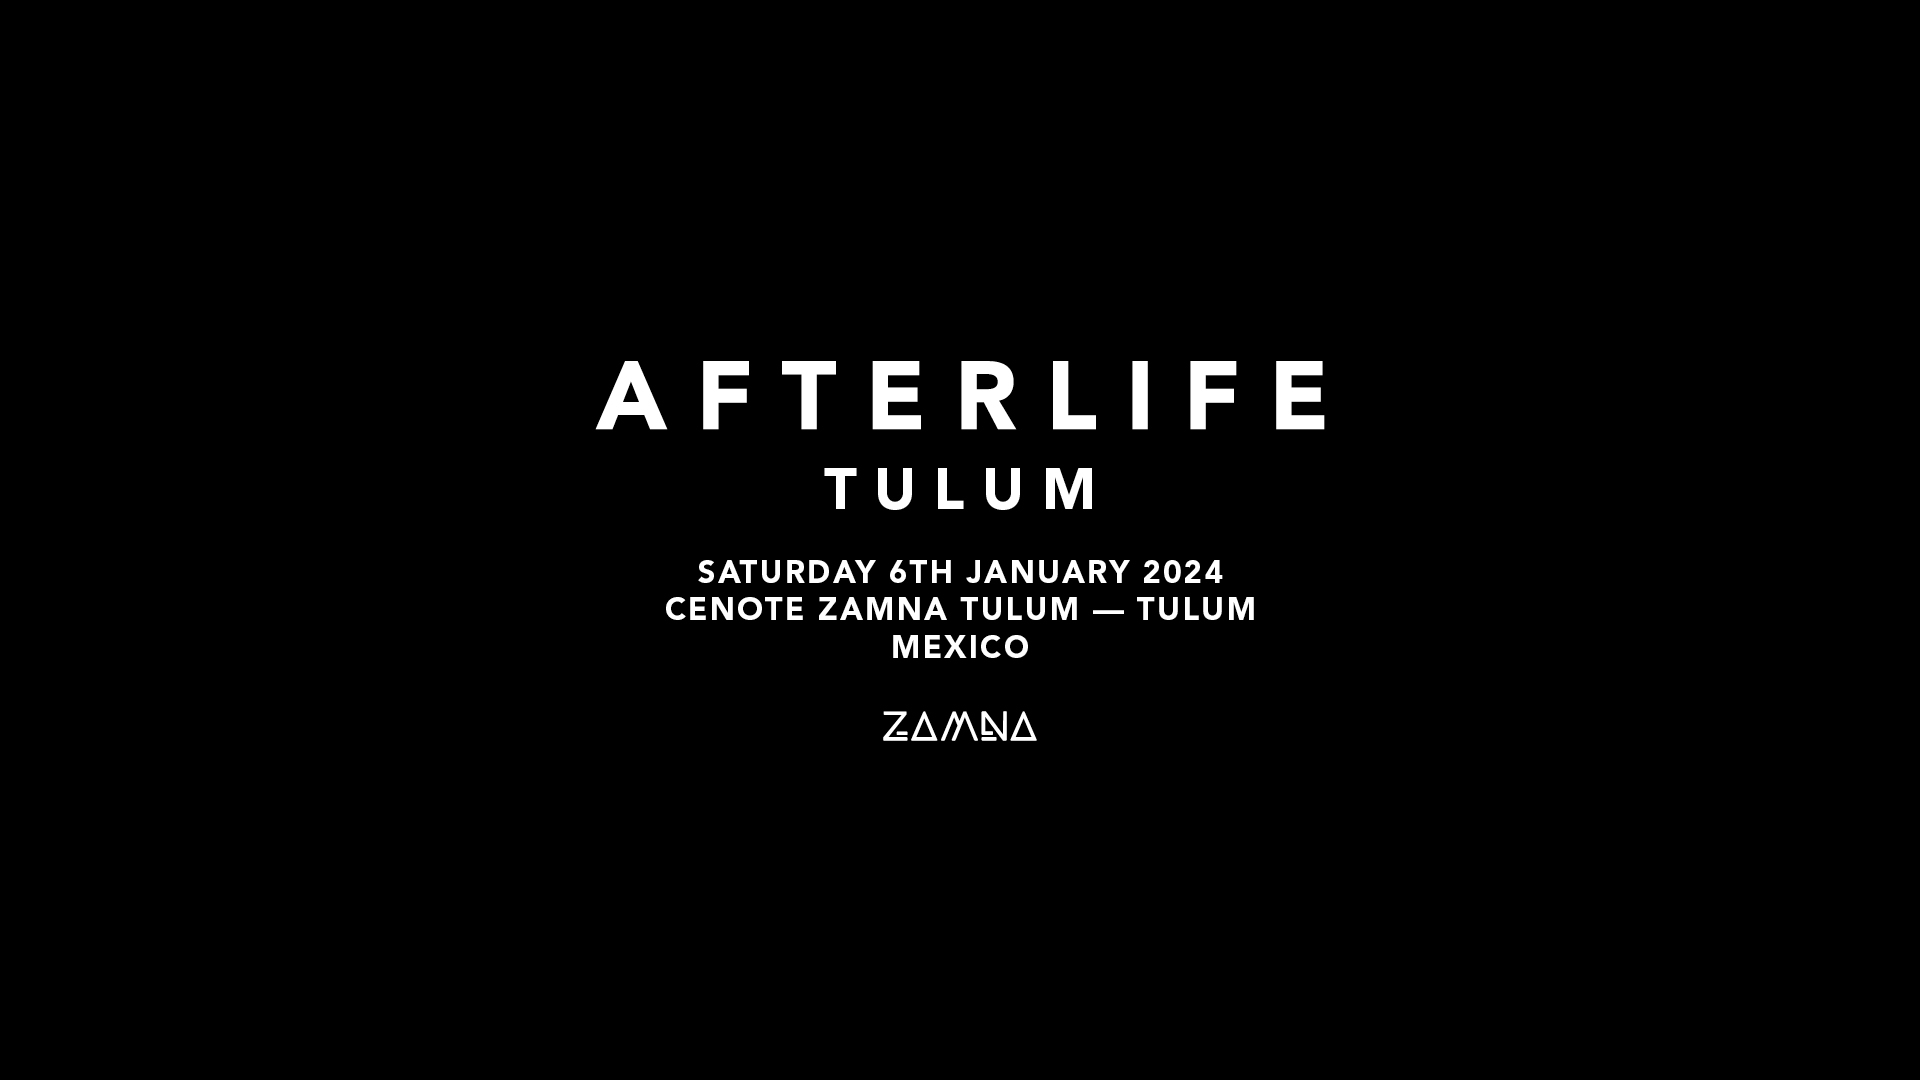 Afterlife Tulum - 6th January 2024, Zamna Tulum, January 6 to January 7